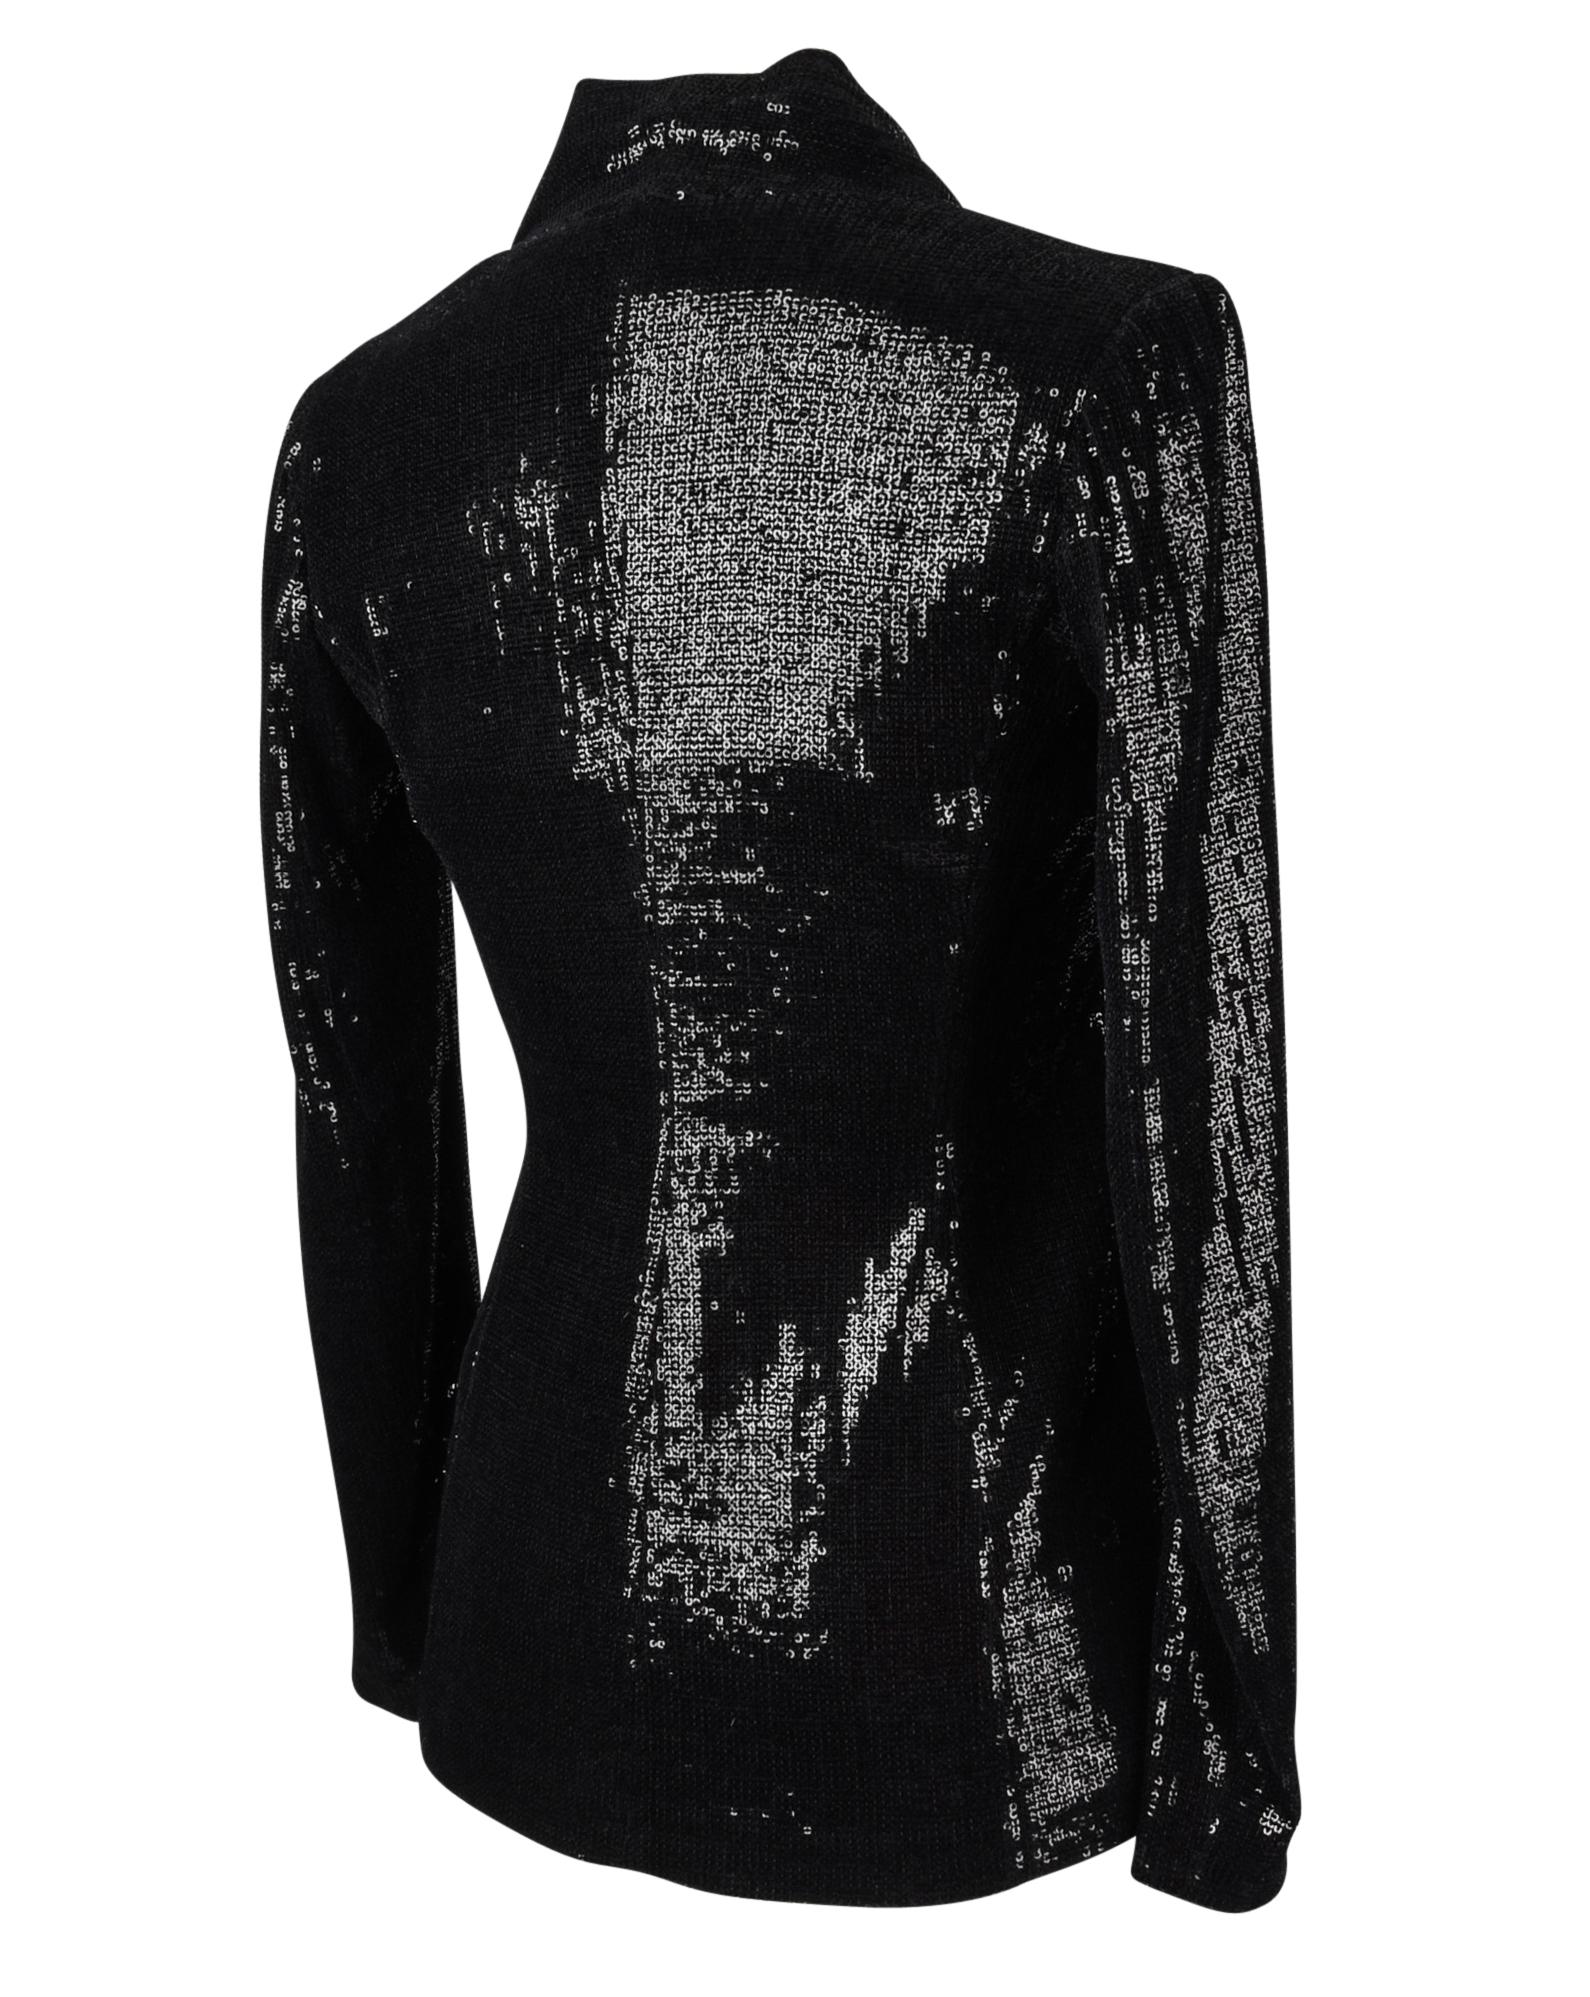 Women's Giorgio Armani Jacket Black Sequined Single Breast 38 / 6 nwt